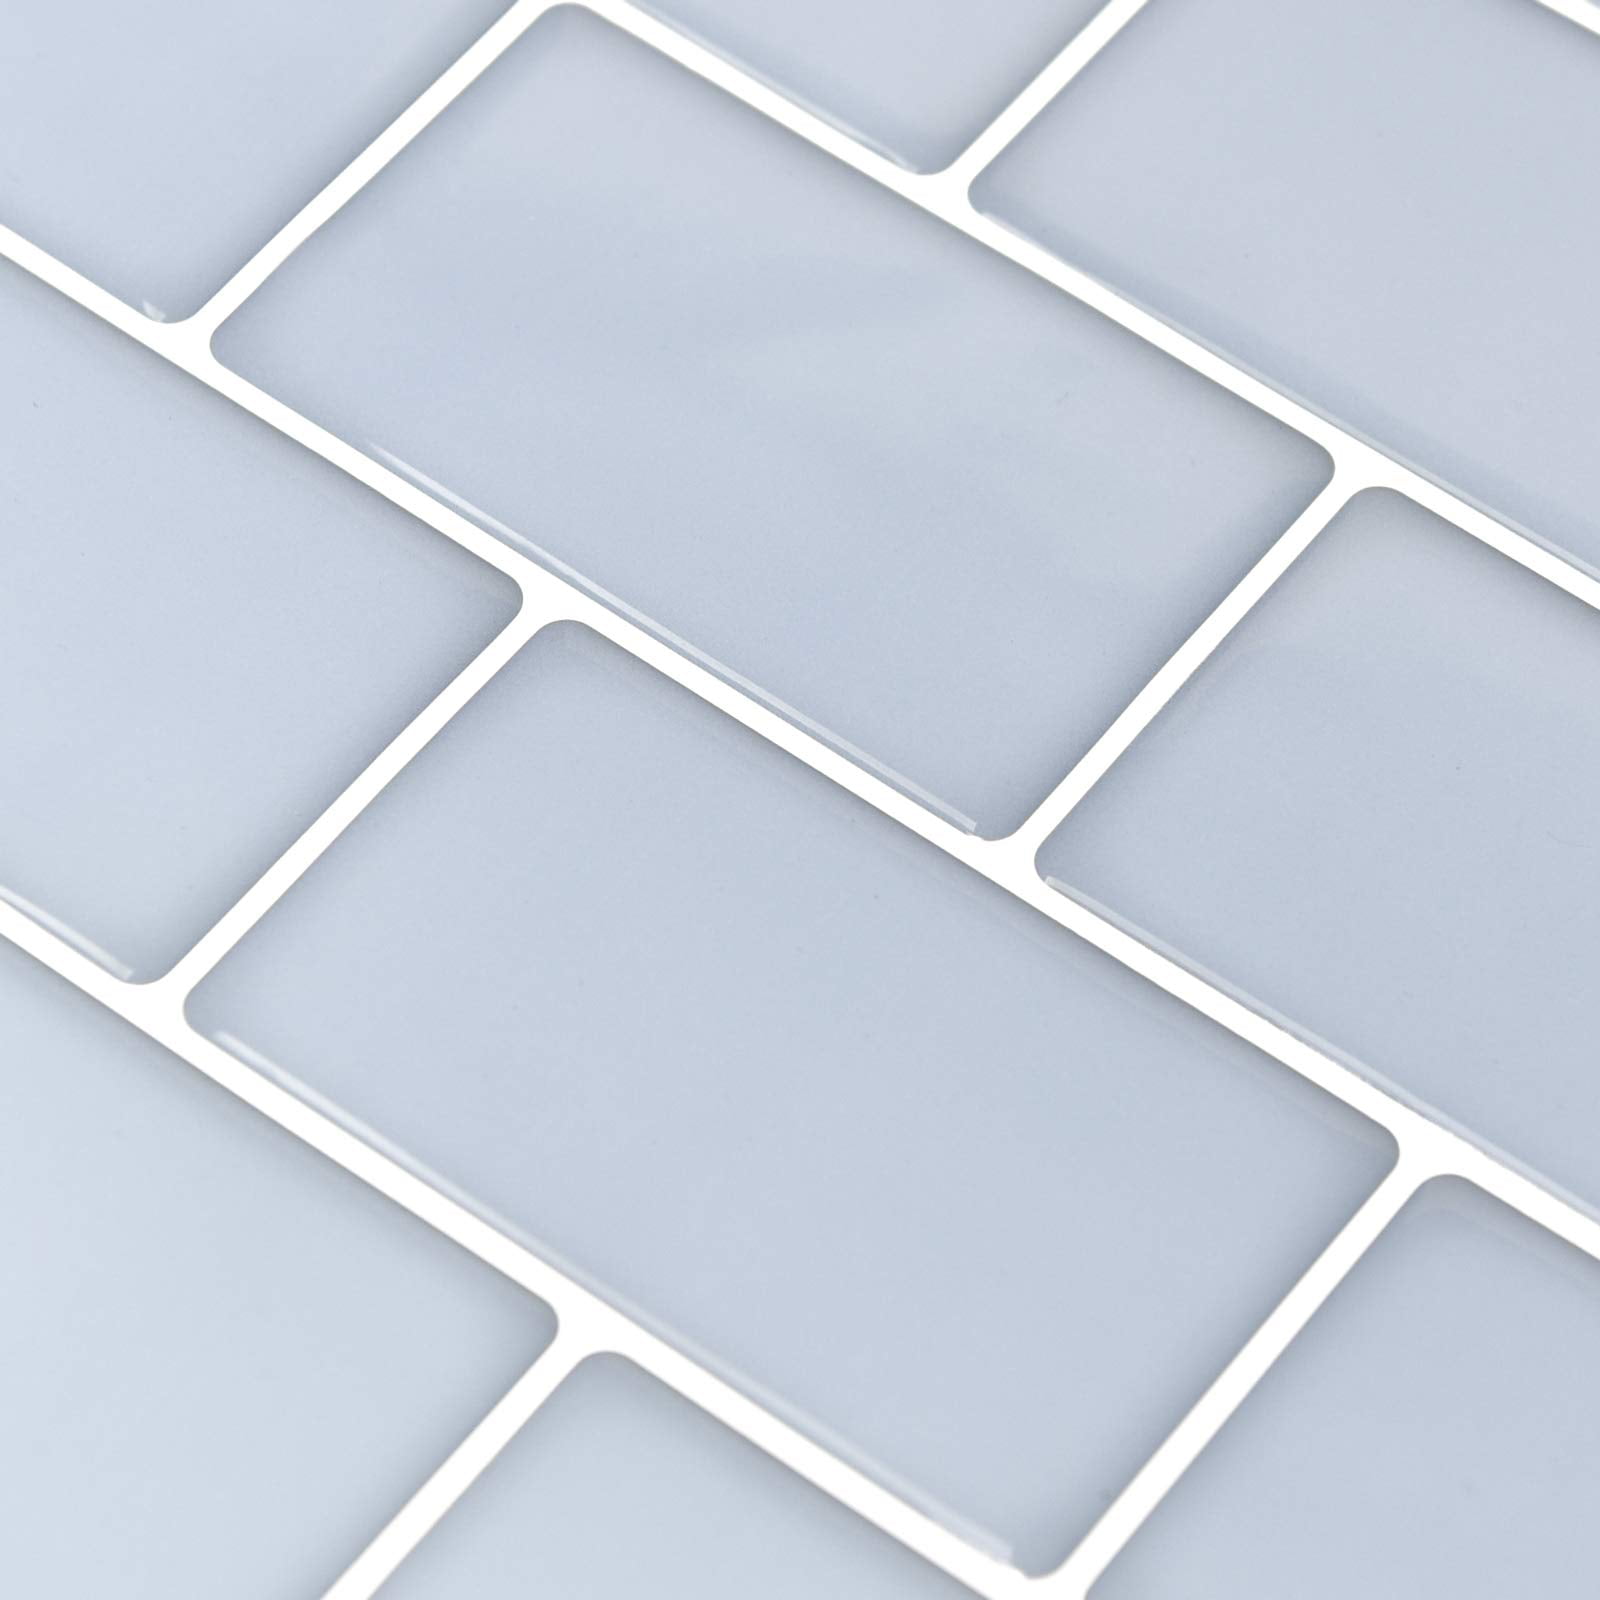 Art3d Marble Look Design 12 in. x 12 in. Eva Peel and Stick Tile Subway  Self-Adhesive Wall Tile Backsplash (8.4 sq. ft./10) LKAhd1128P0 - The Home  Depot